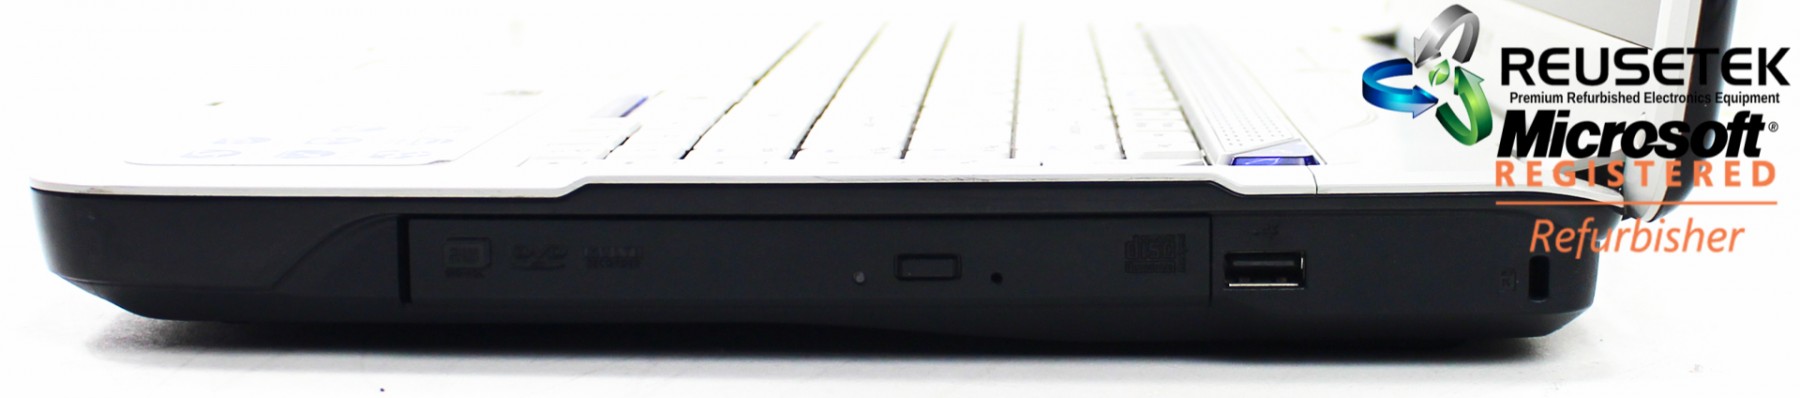 500031069-Acer Aspire 5920 15.4" Notebook Laptop-image